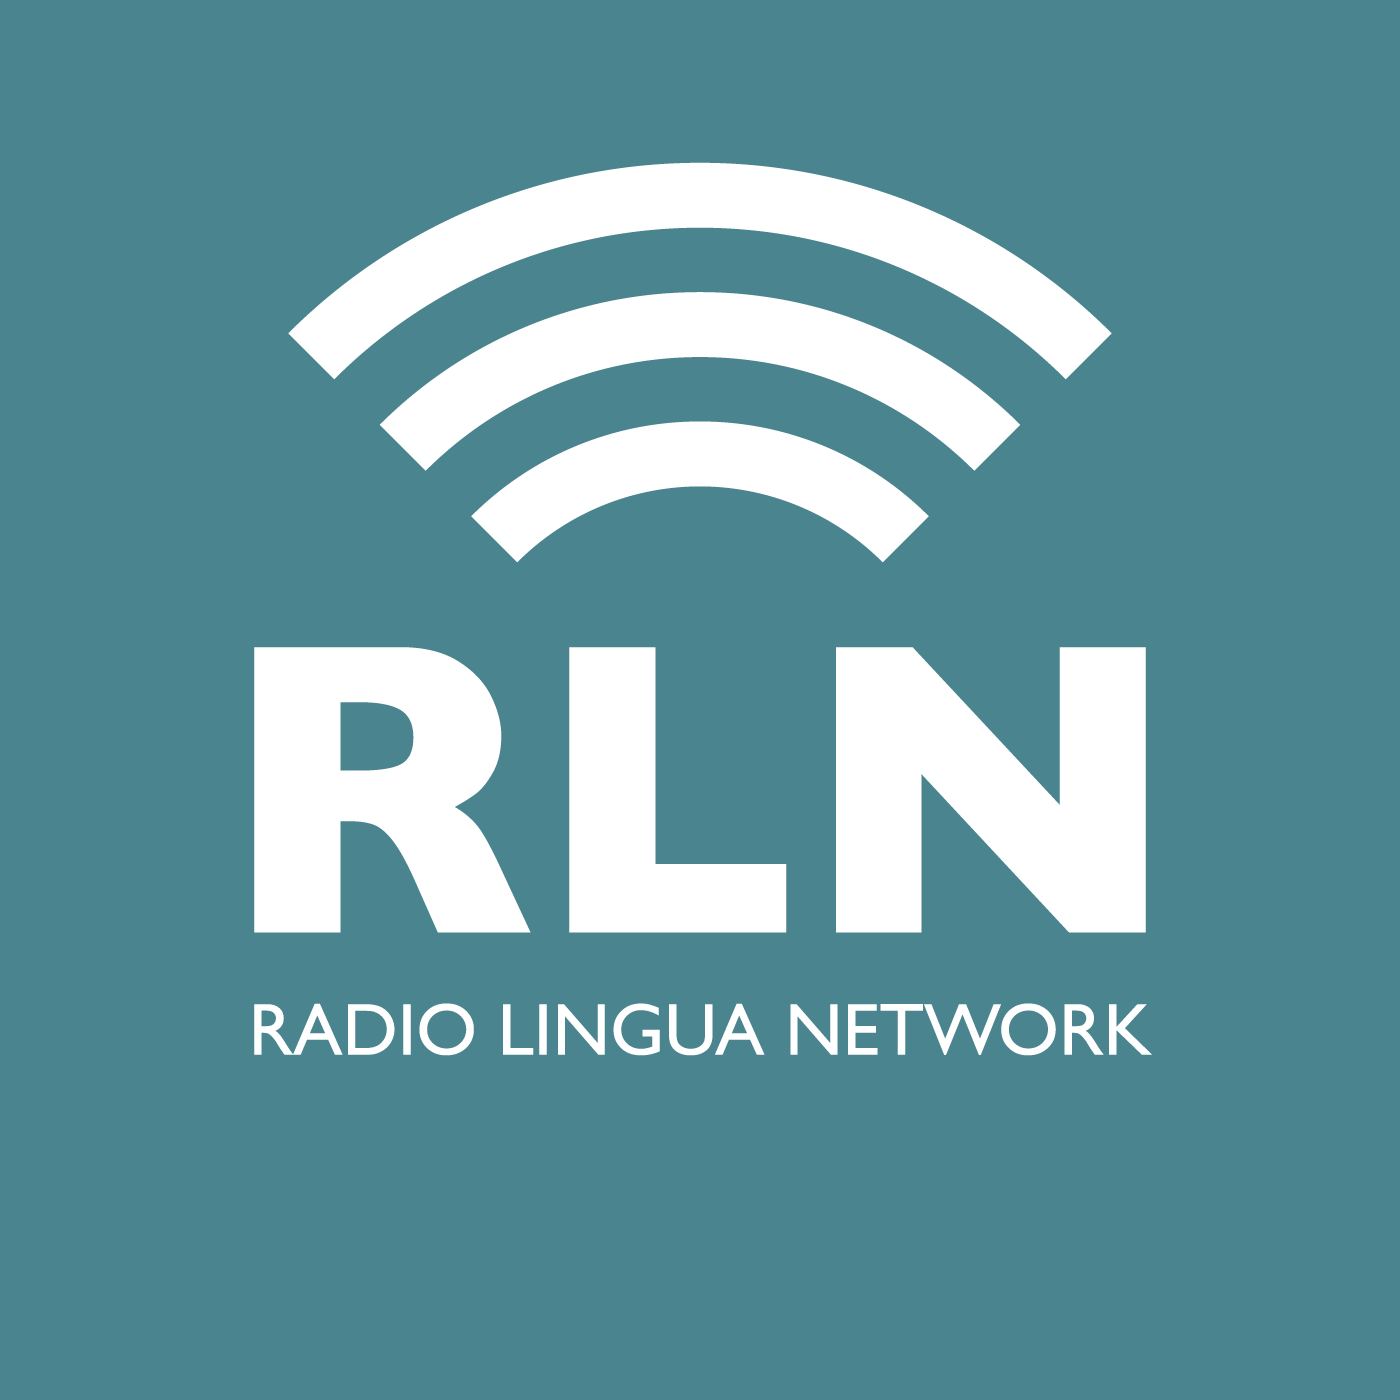 Radio Lingua